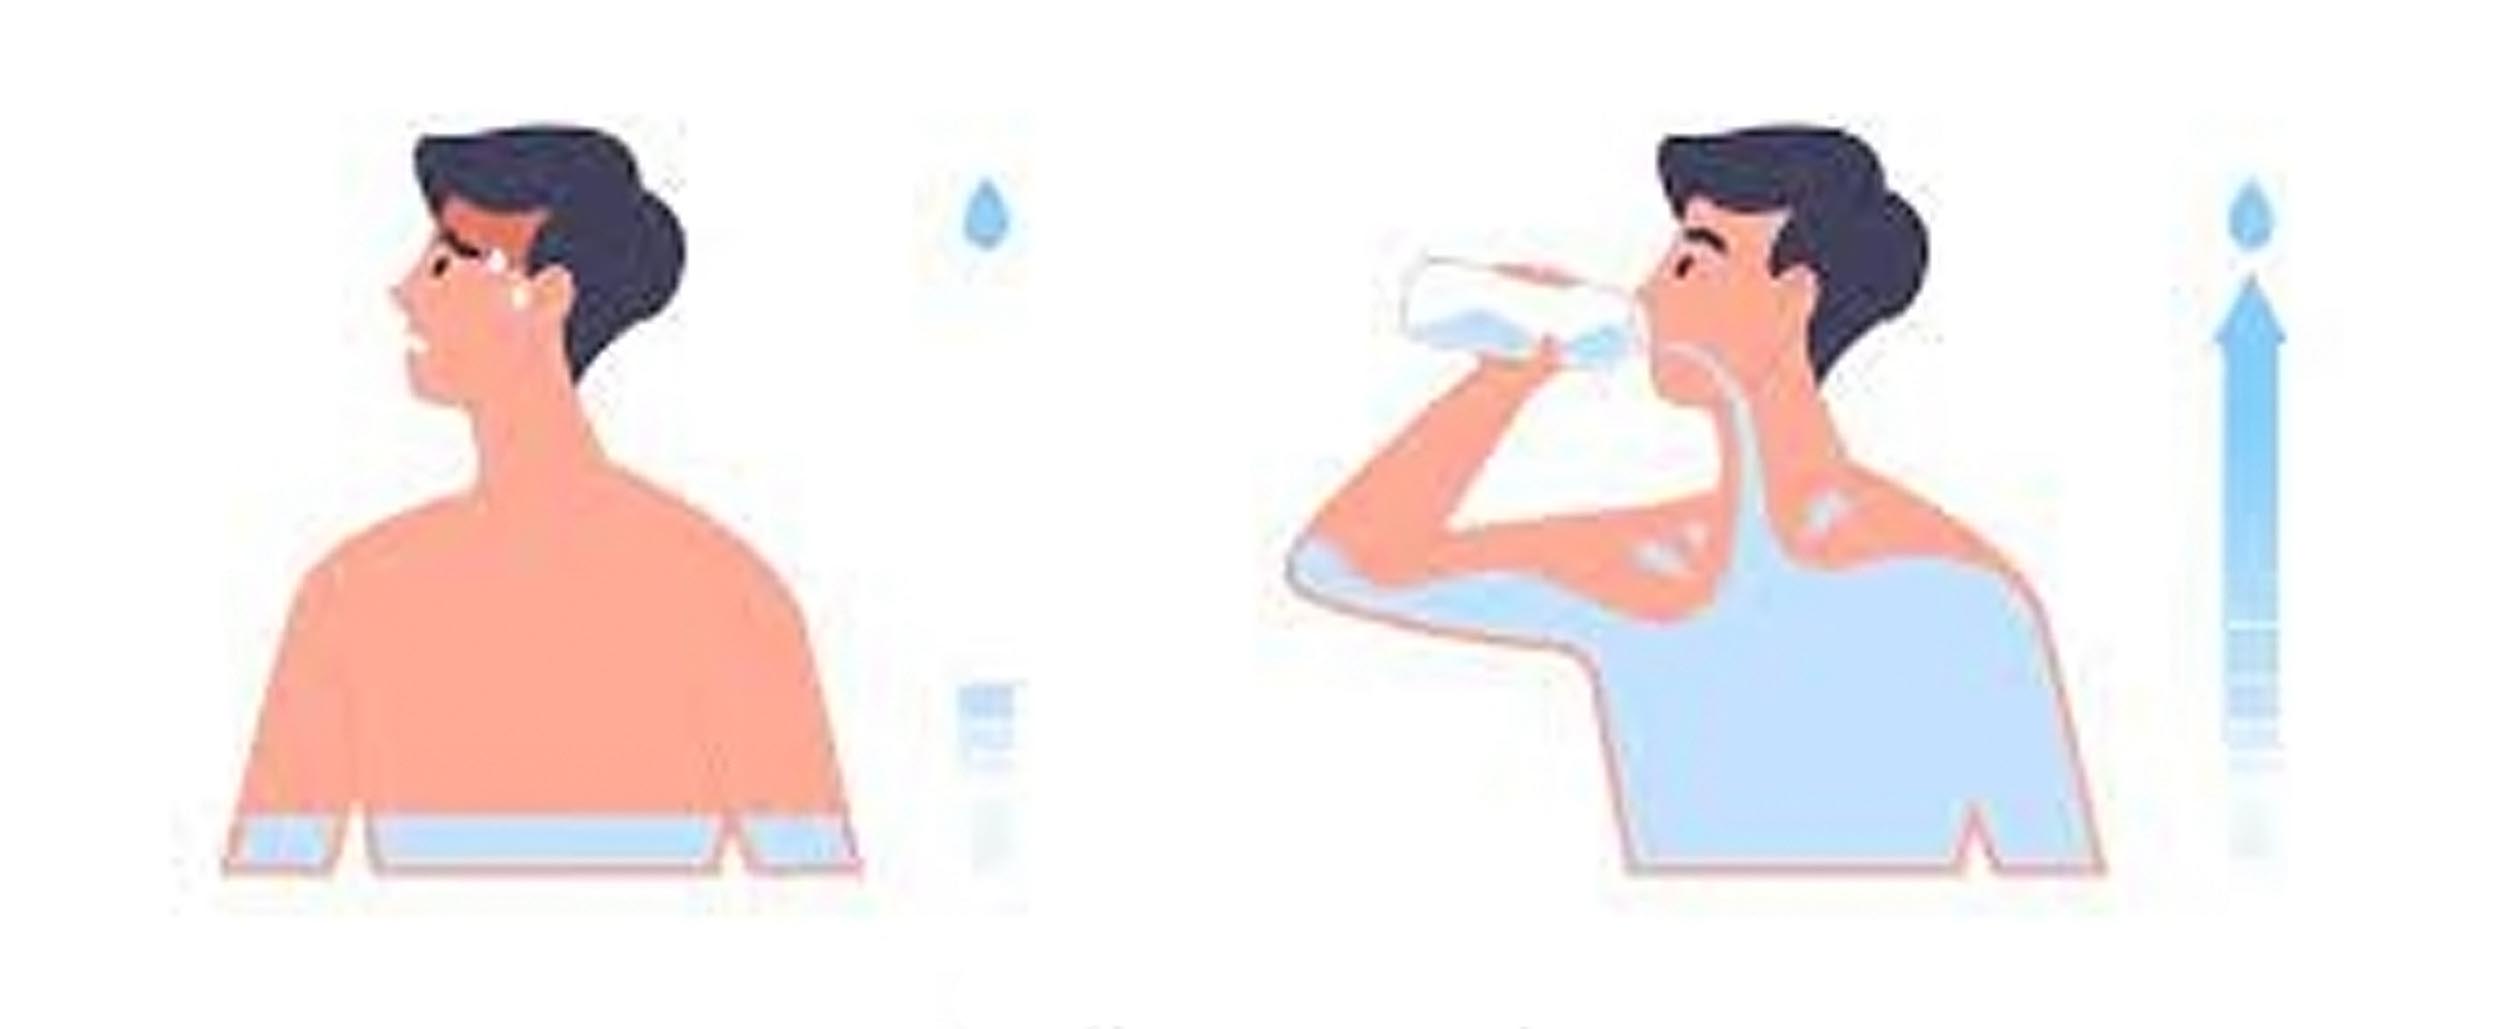 آب نوشیدن